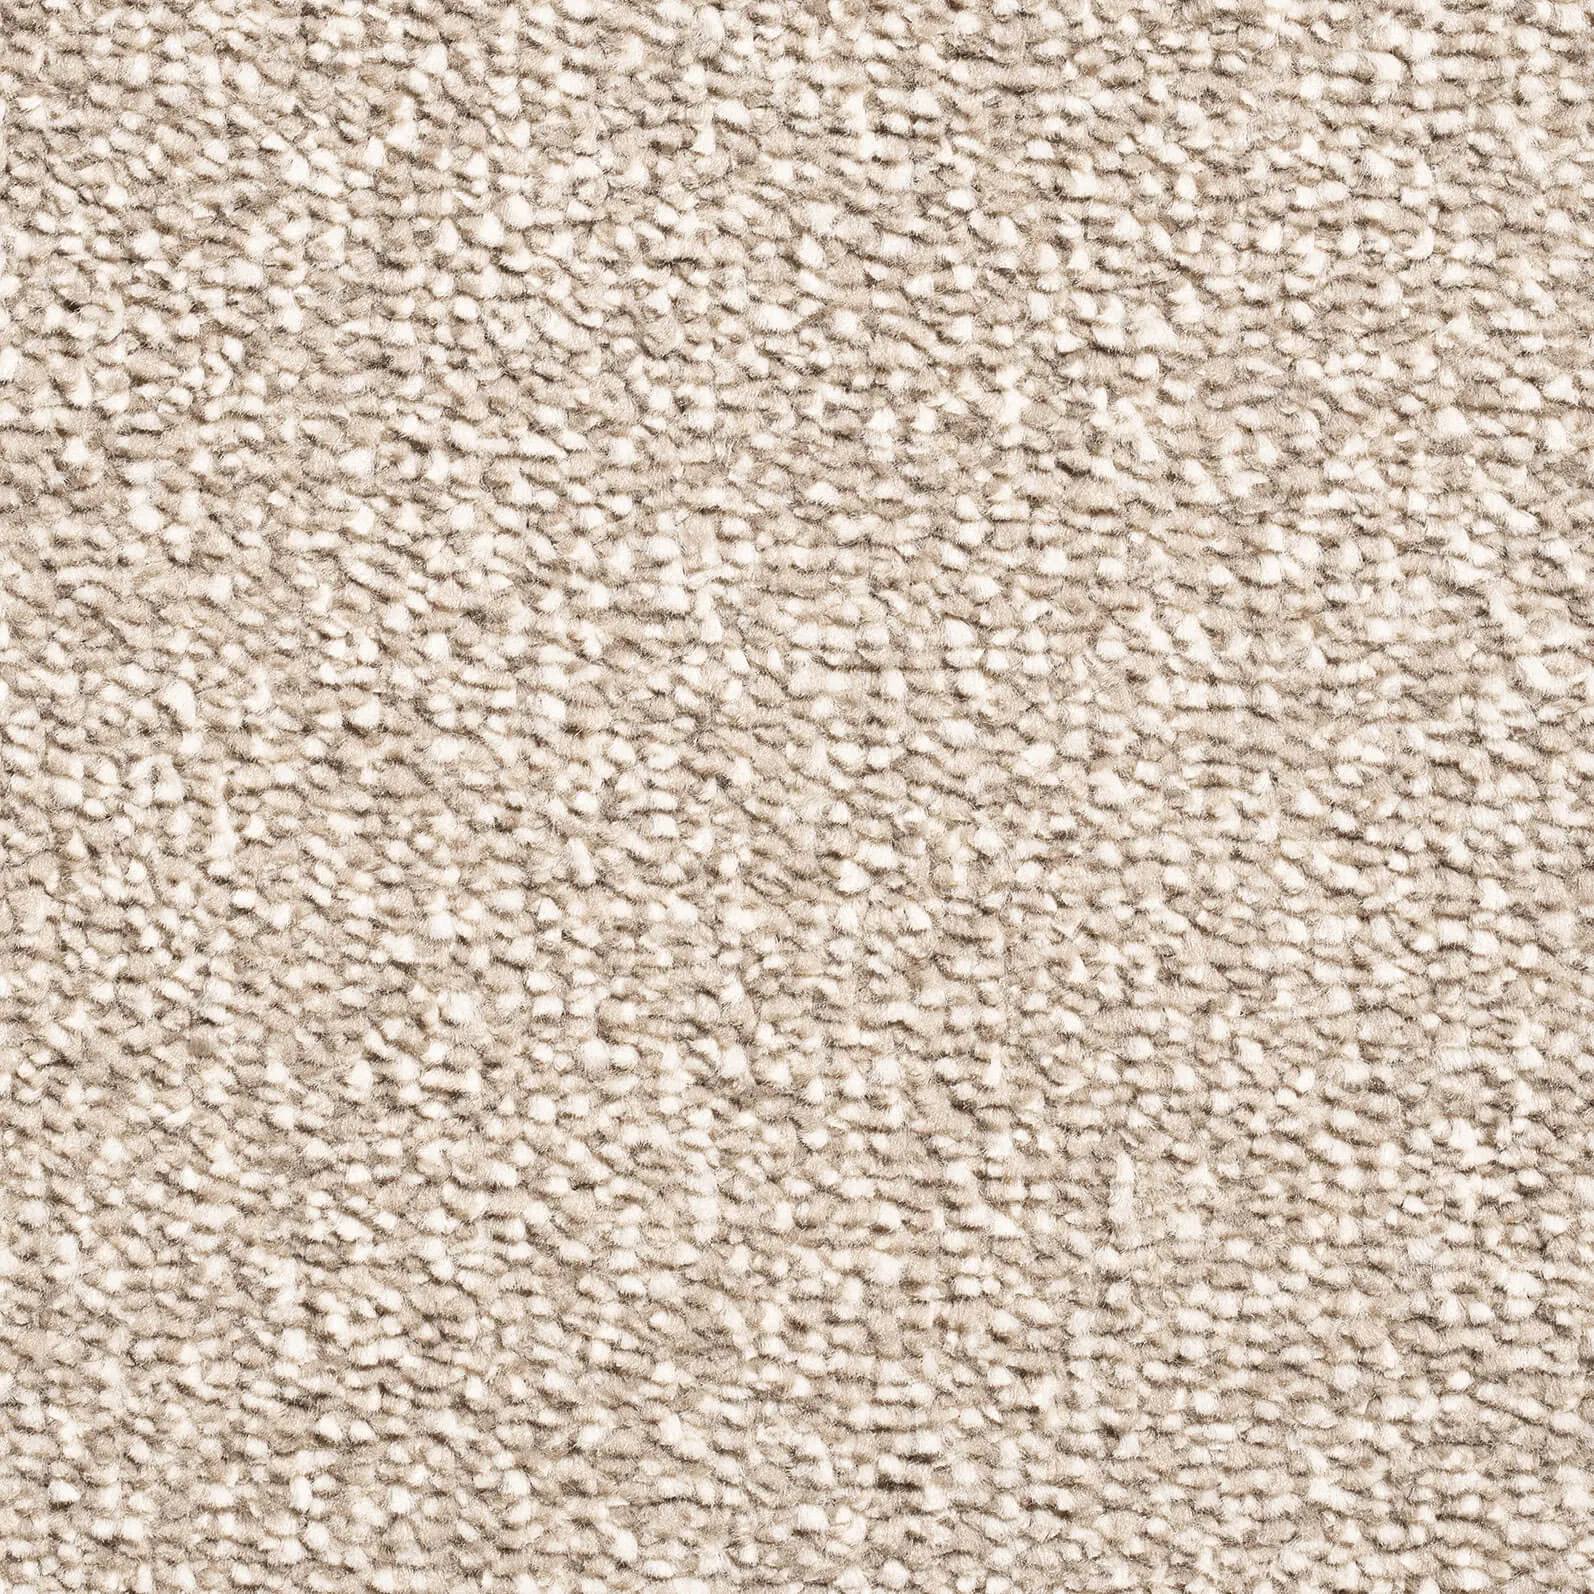 Caress Saxony Carpet - 170 Taupe